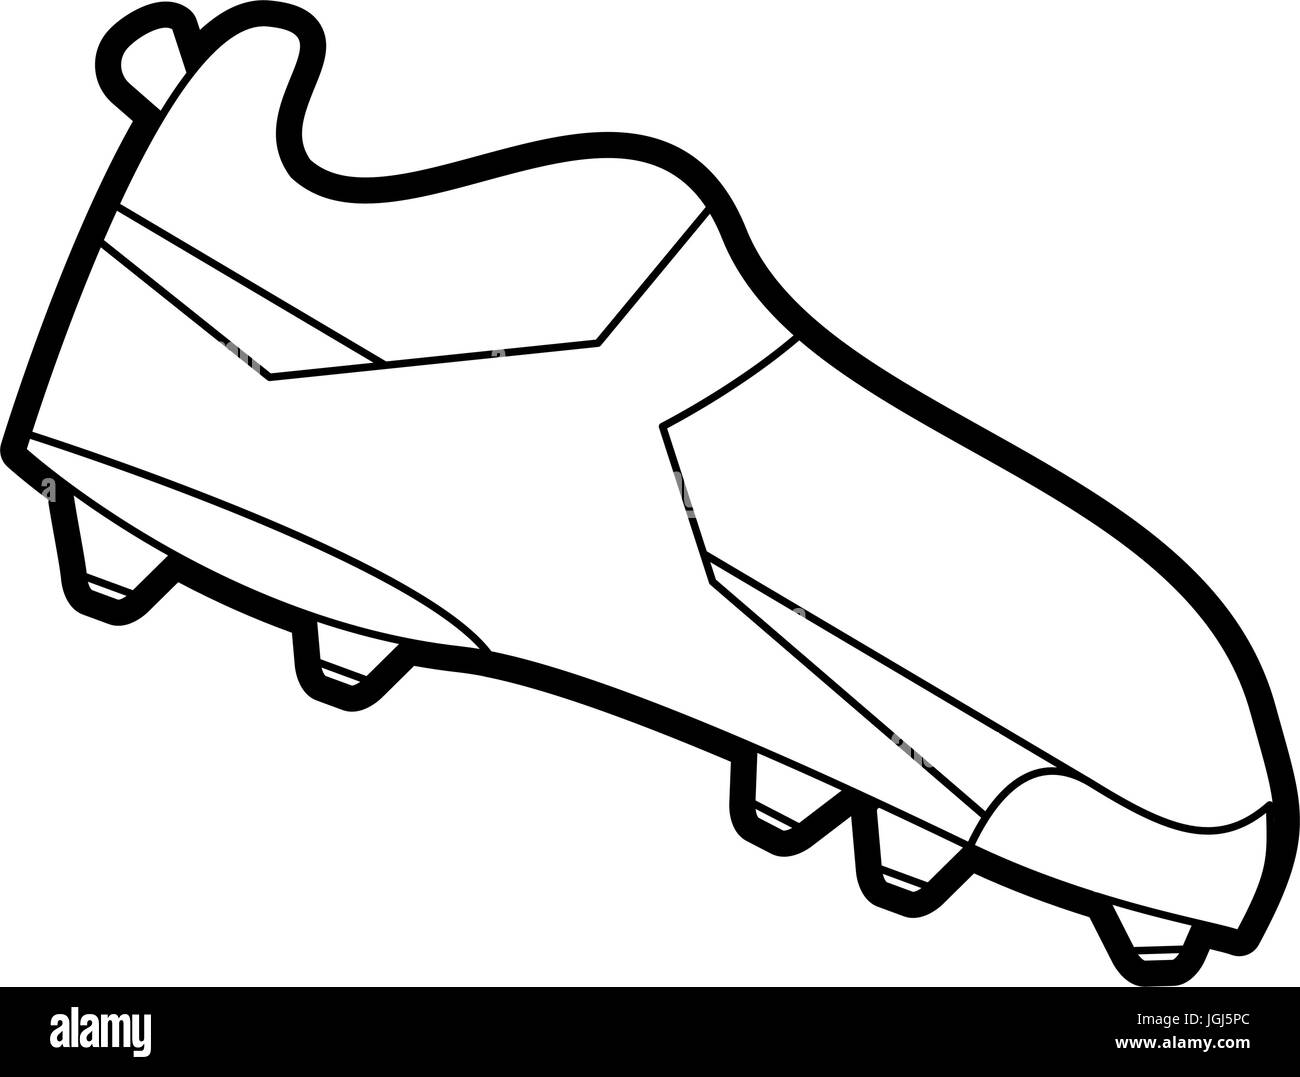 soccer shoe vector illustration Stock Vector